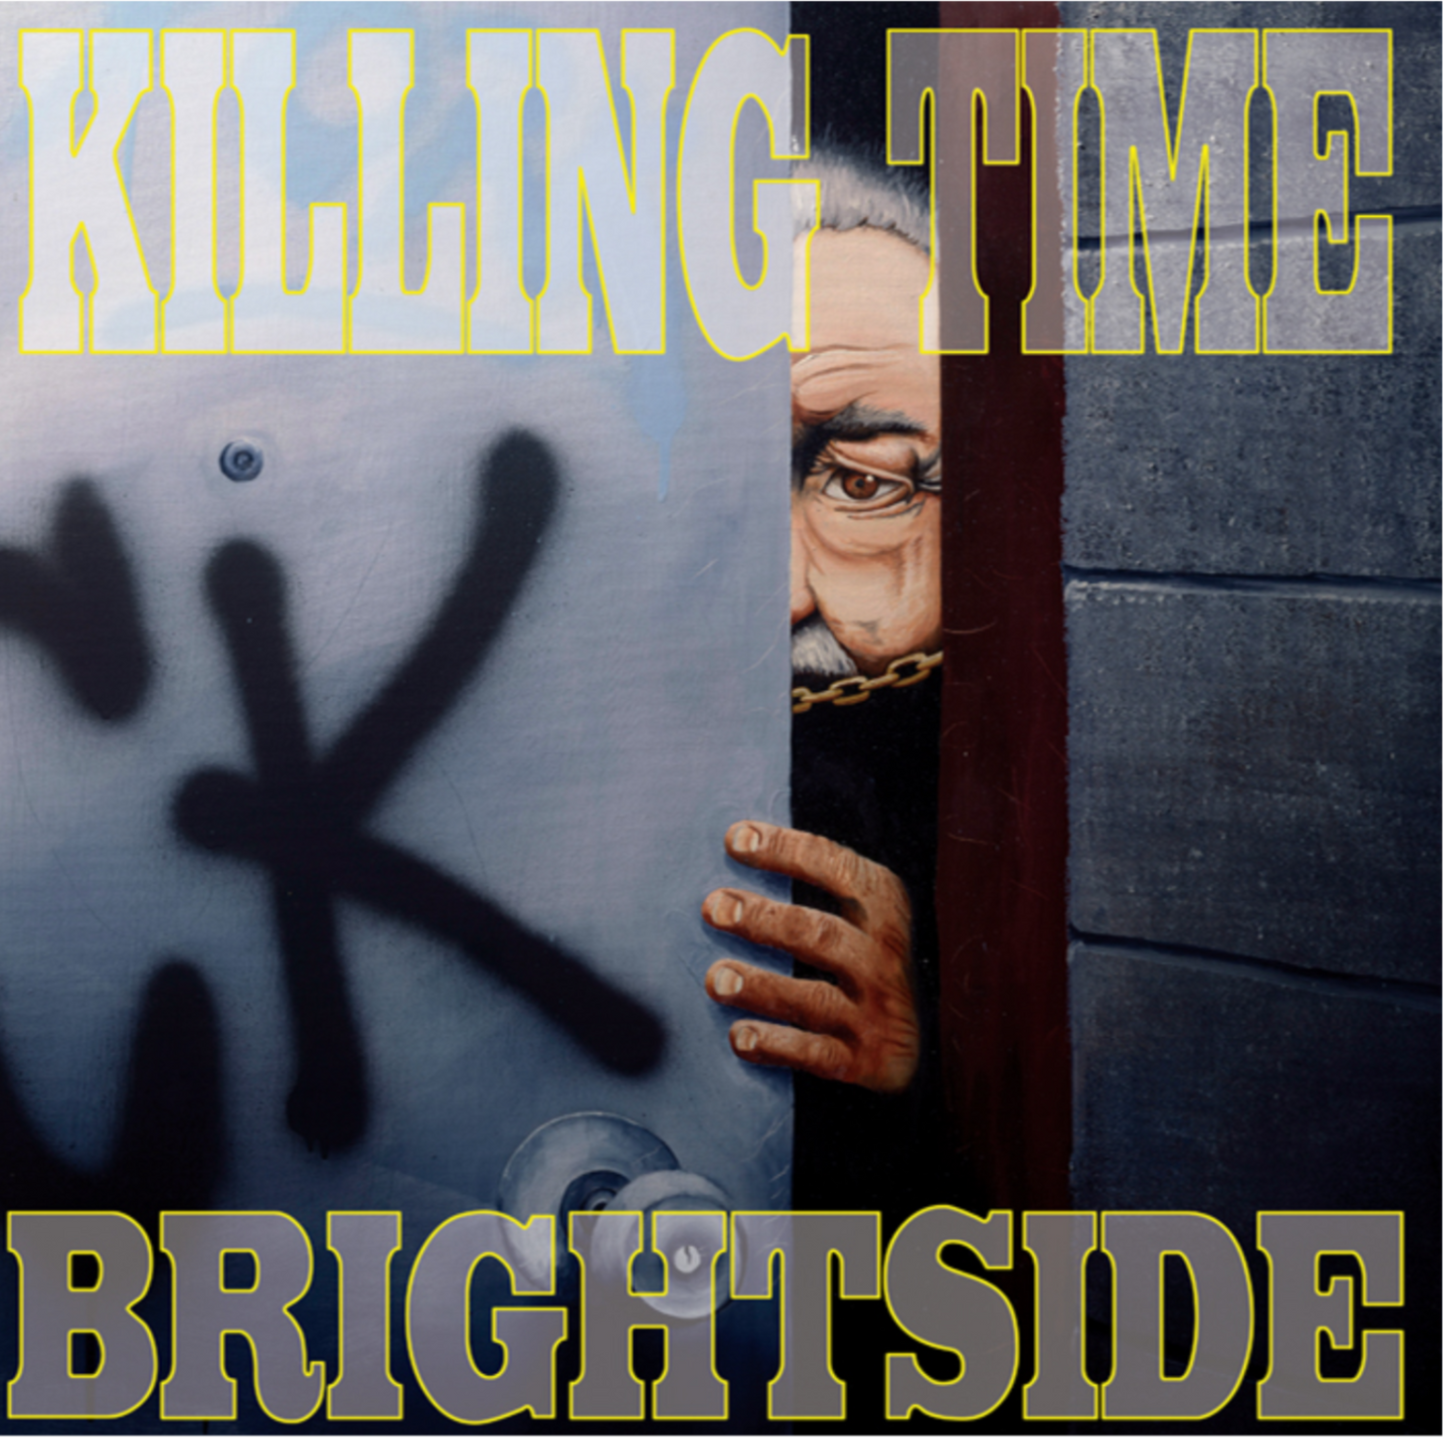 Killing Time "Brightside"